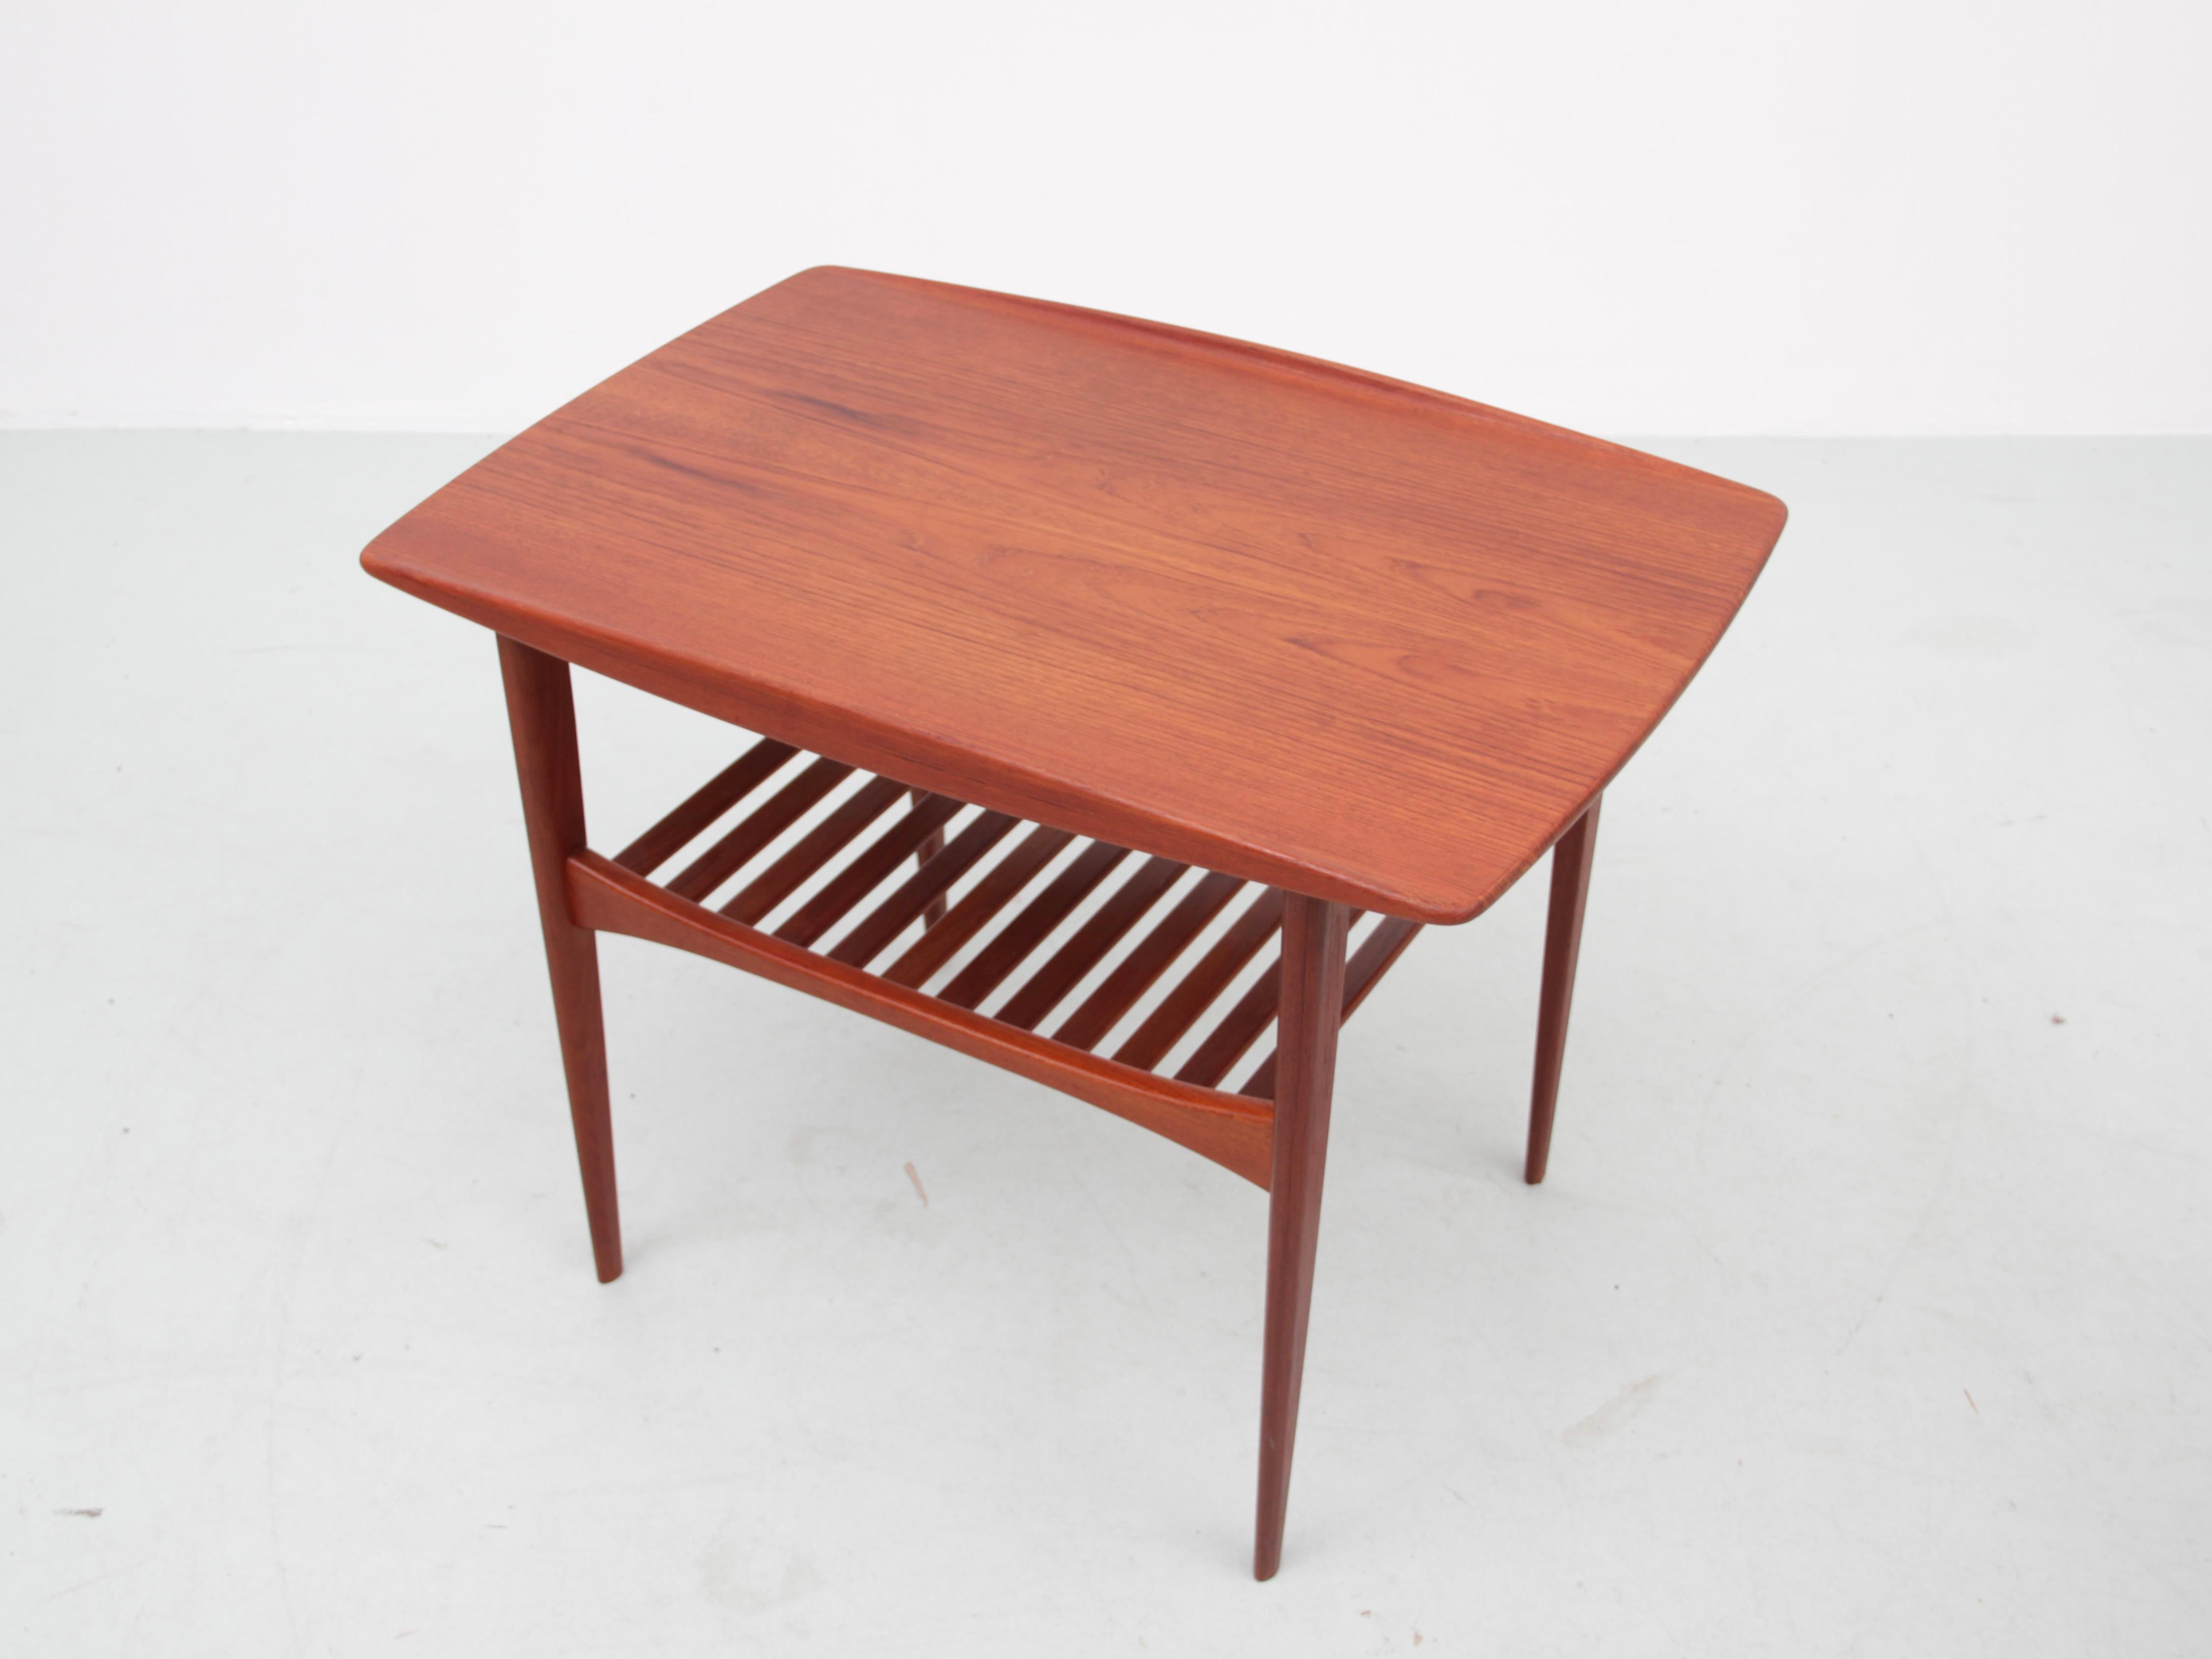 Danish Mid-Century Modern Side Table in Teak by Tove and Edvard Kindt-Larsen